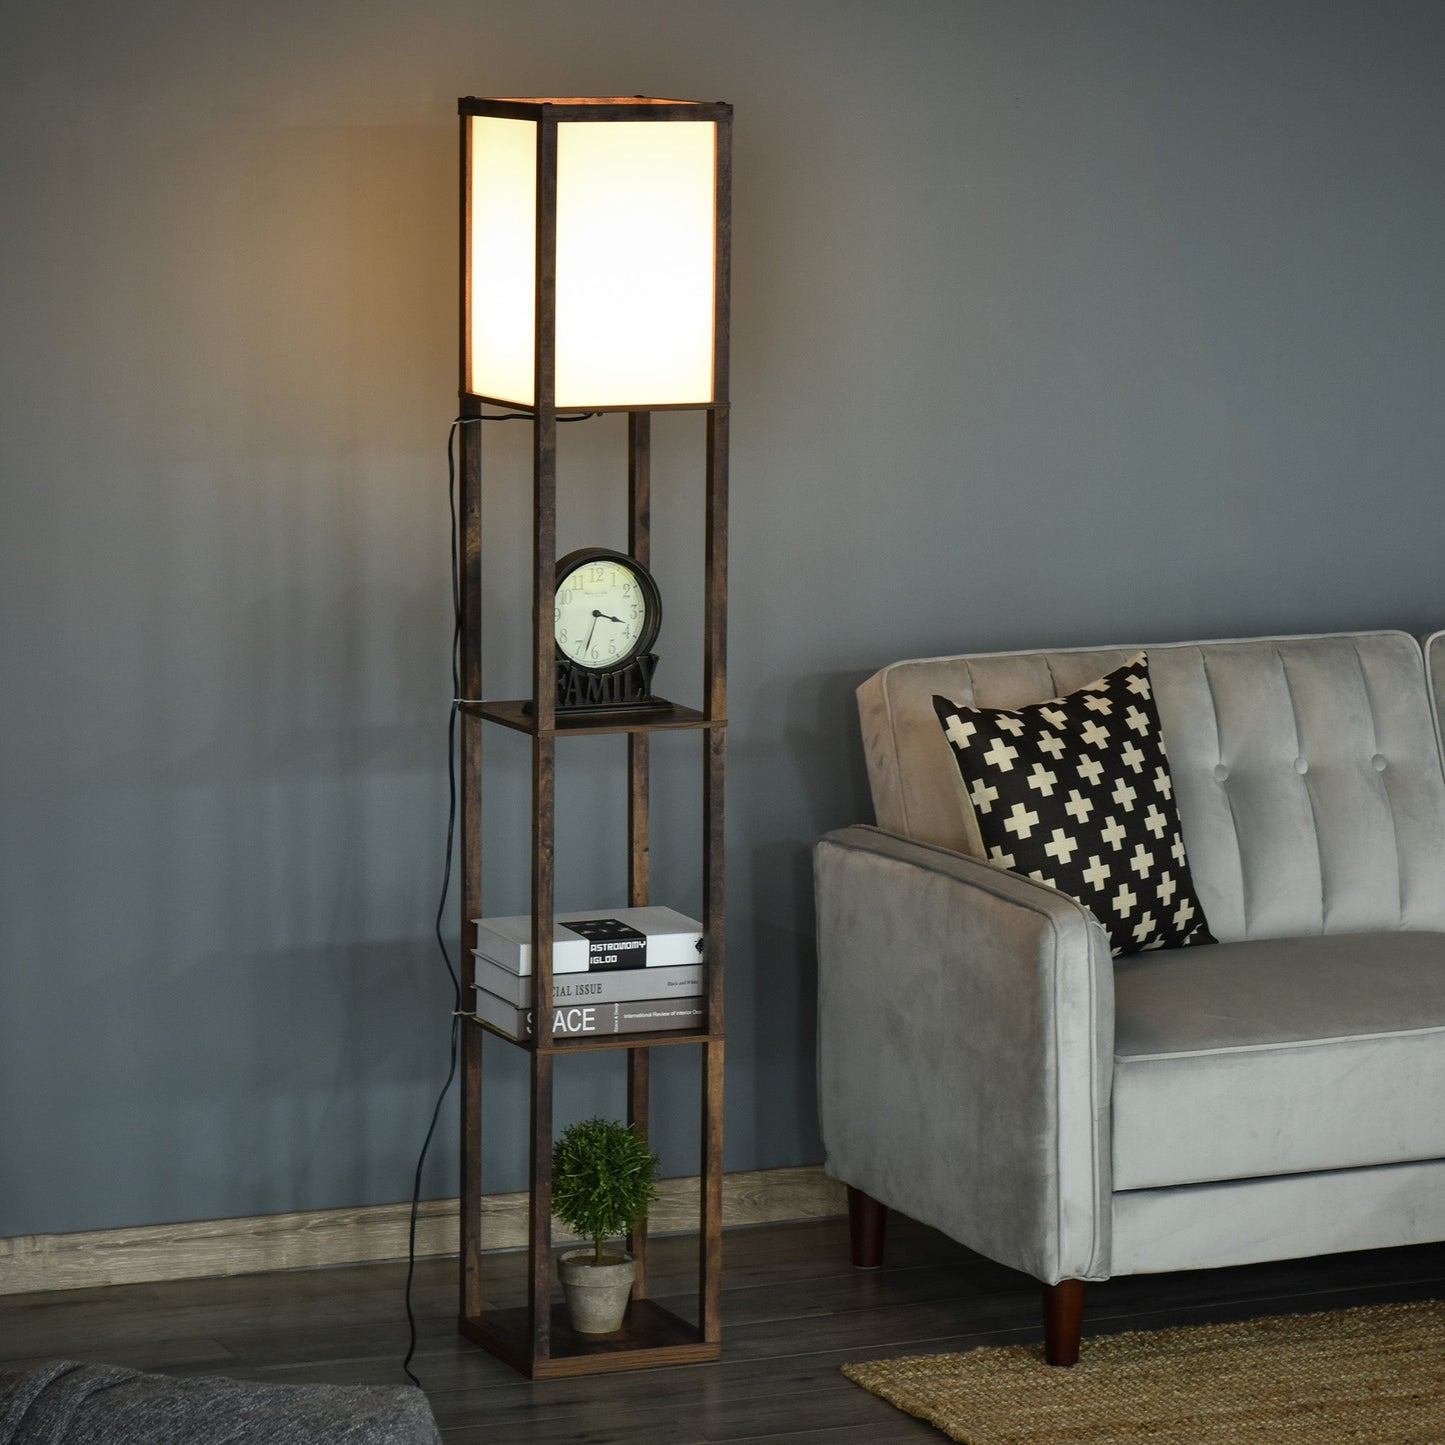 HOMCOM 4-Tier Floor Lamp Standing Lamp with Storage Shelf for Home Office Dorm Brown